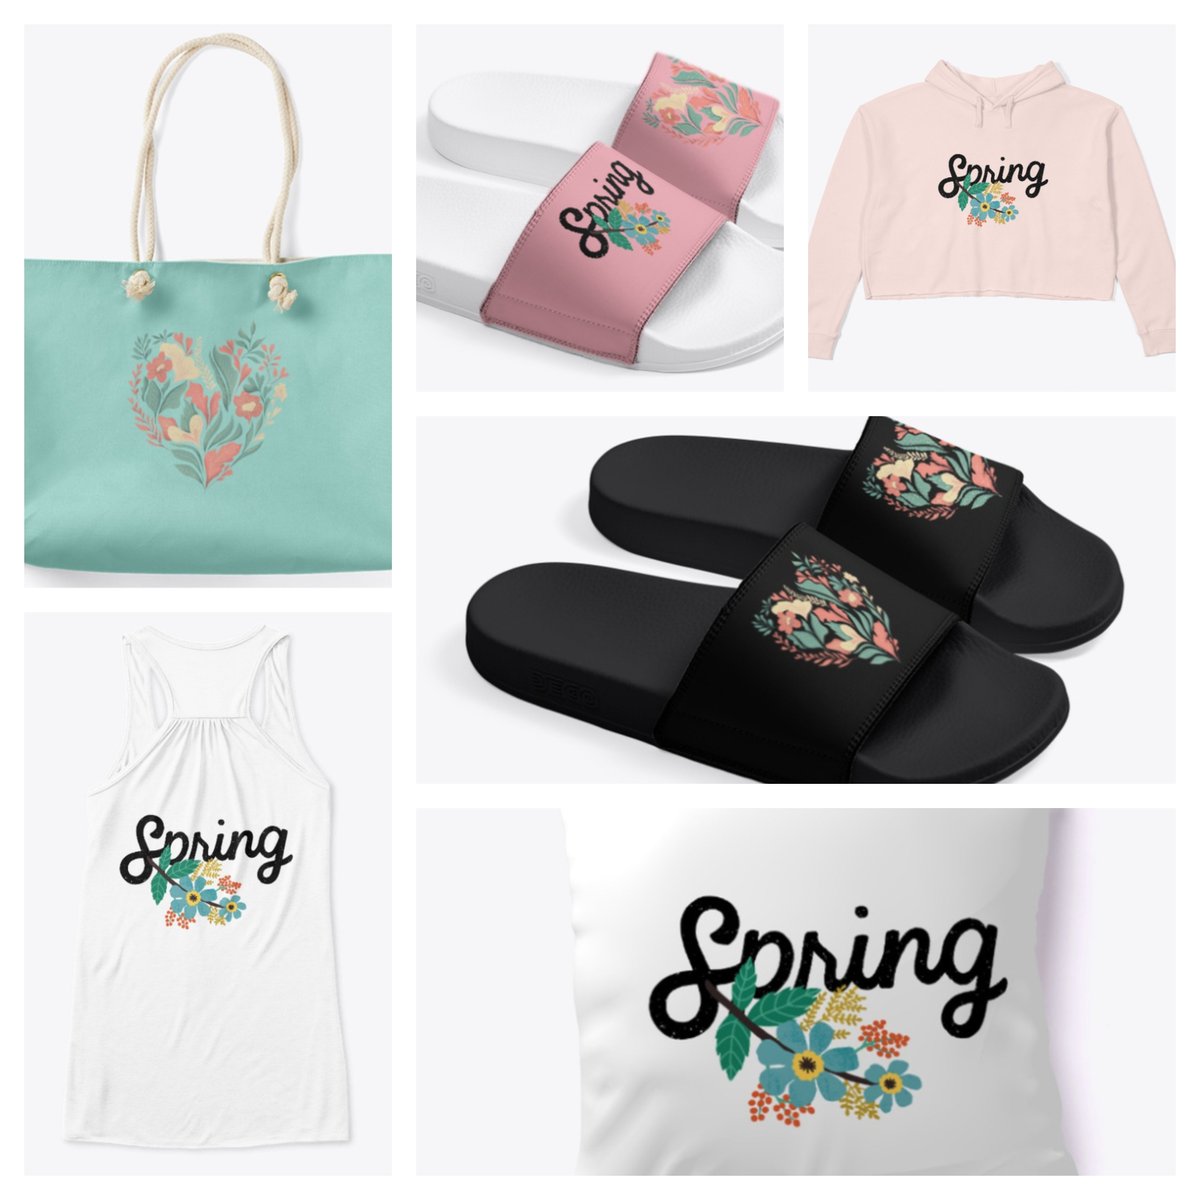 Blossom into Joy
cliq.ink/AvEWi

#FreshAndFloral #SpringDecor #HandcraftedBeauty #SeasonalStitching #BlossomAndBloom #SpringHomeDecor #ArtOfRenewal #Spring #SpringTime #SpringRenewal #WithLove #ColorfulSpring #BloomingArt #SpringInspiration #EmbroideryMagic #Floral